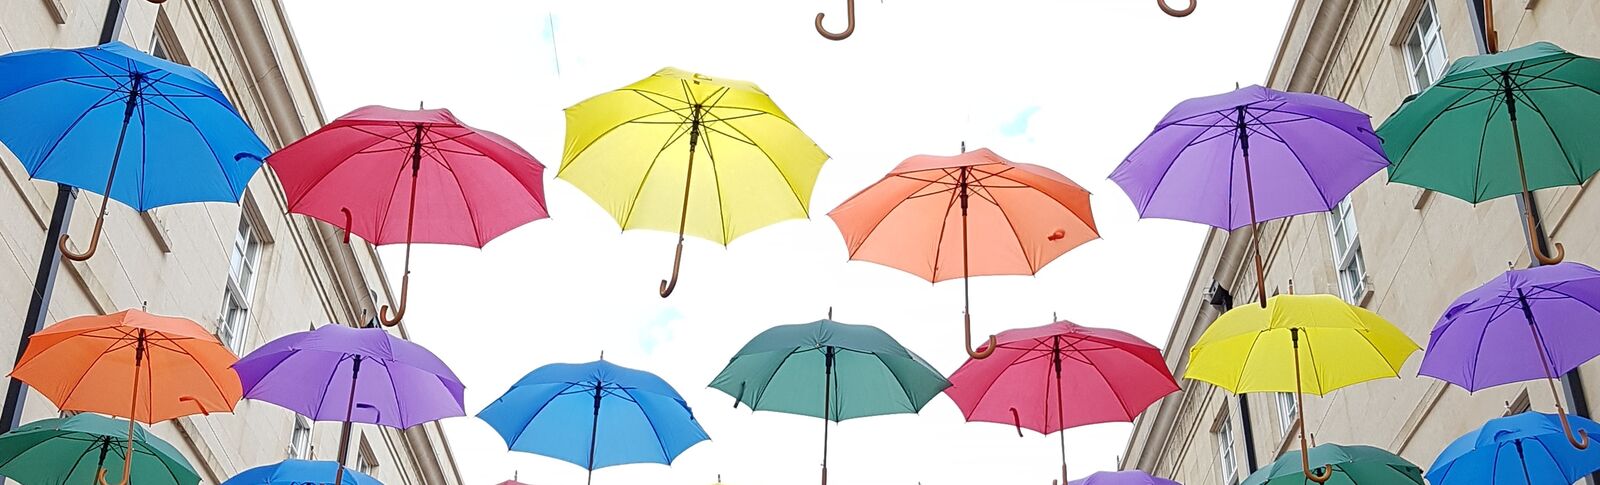 Umbrella artwork in Bath